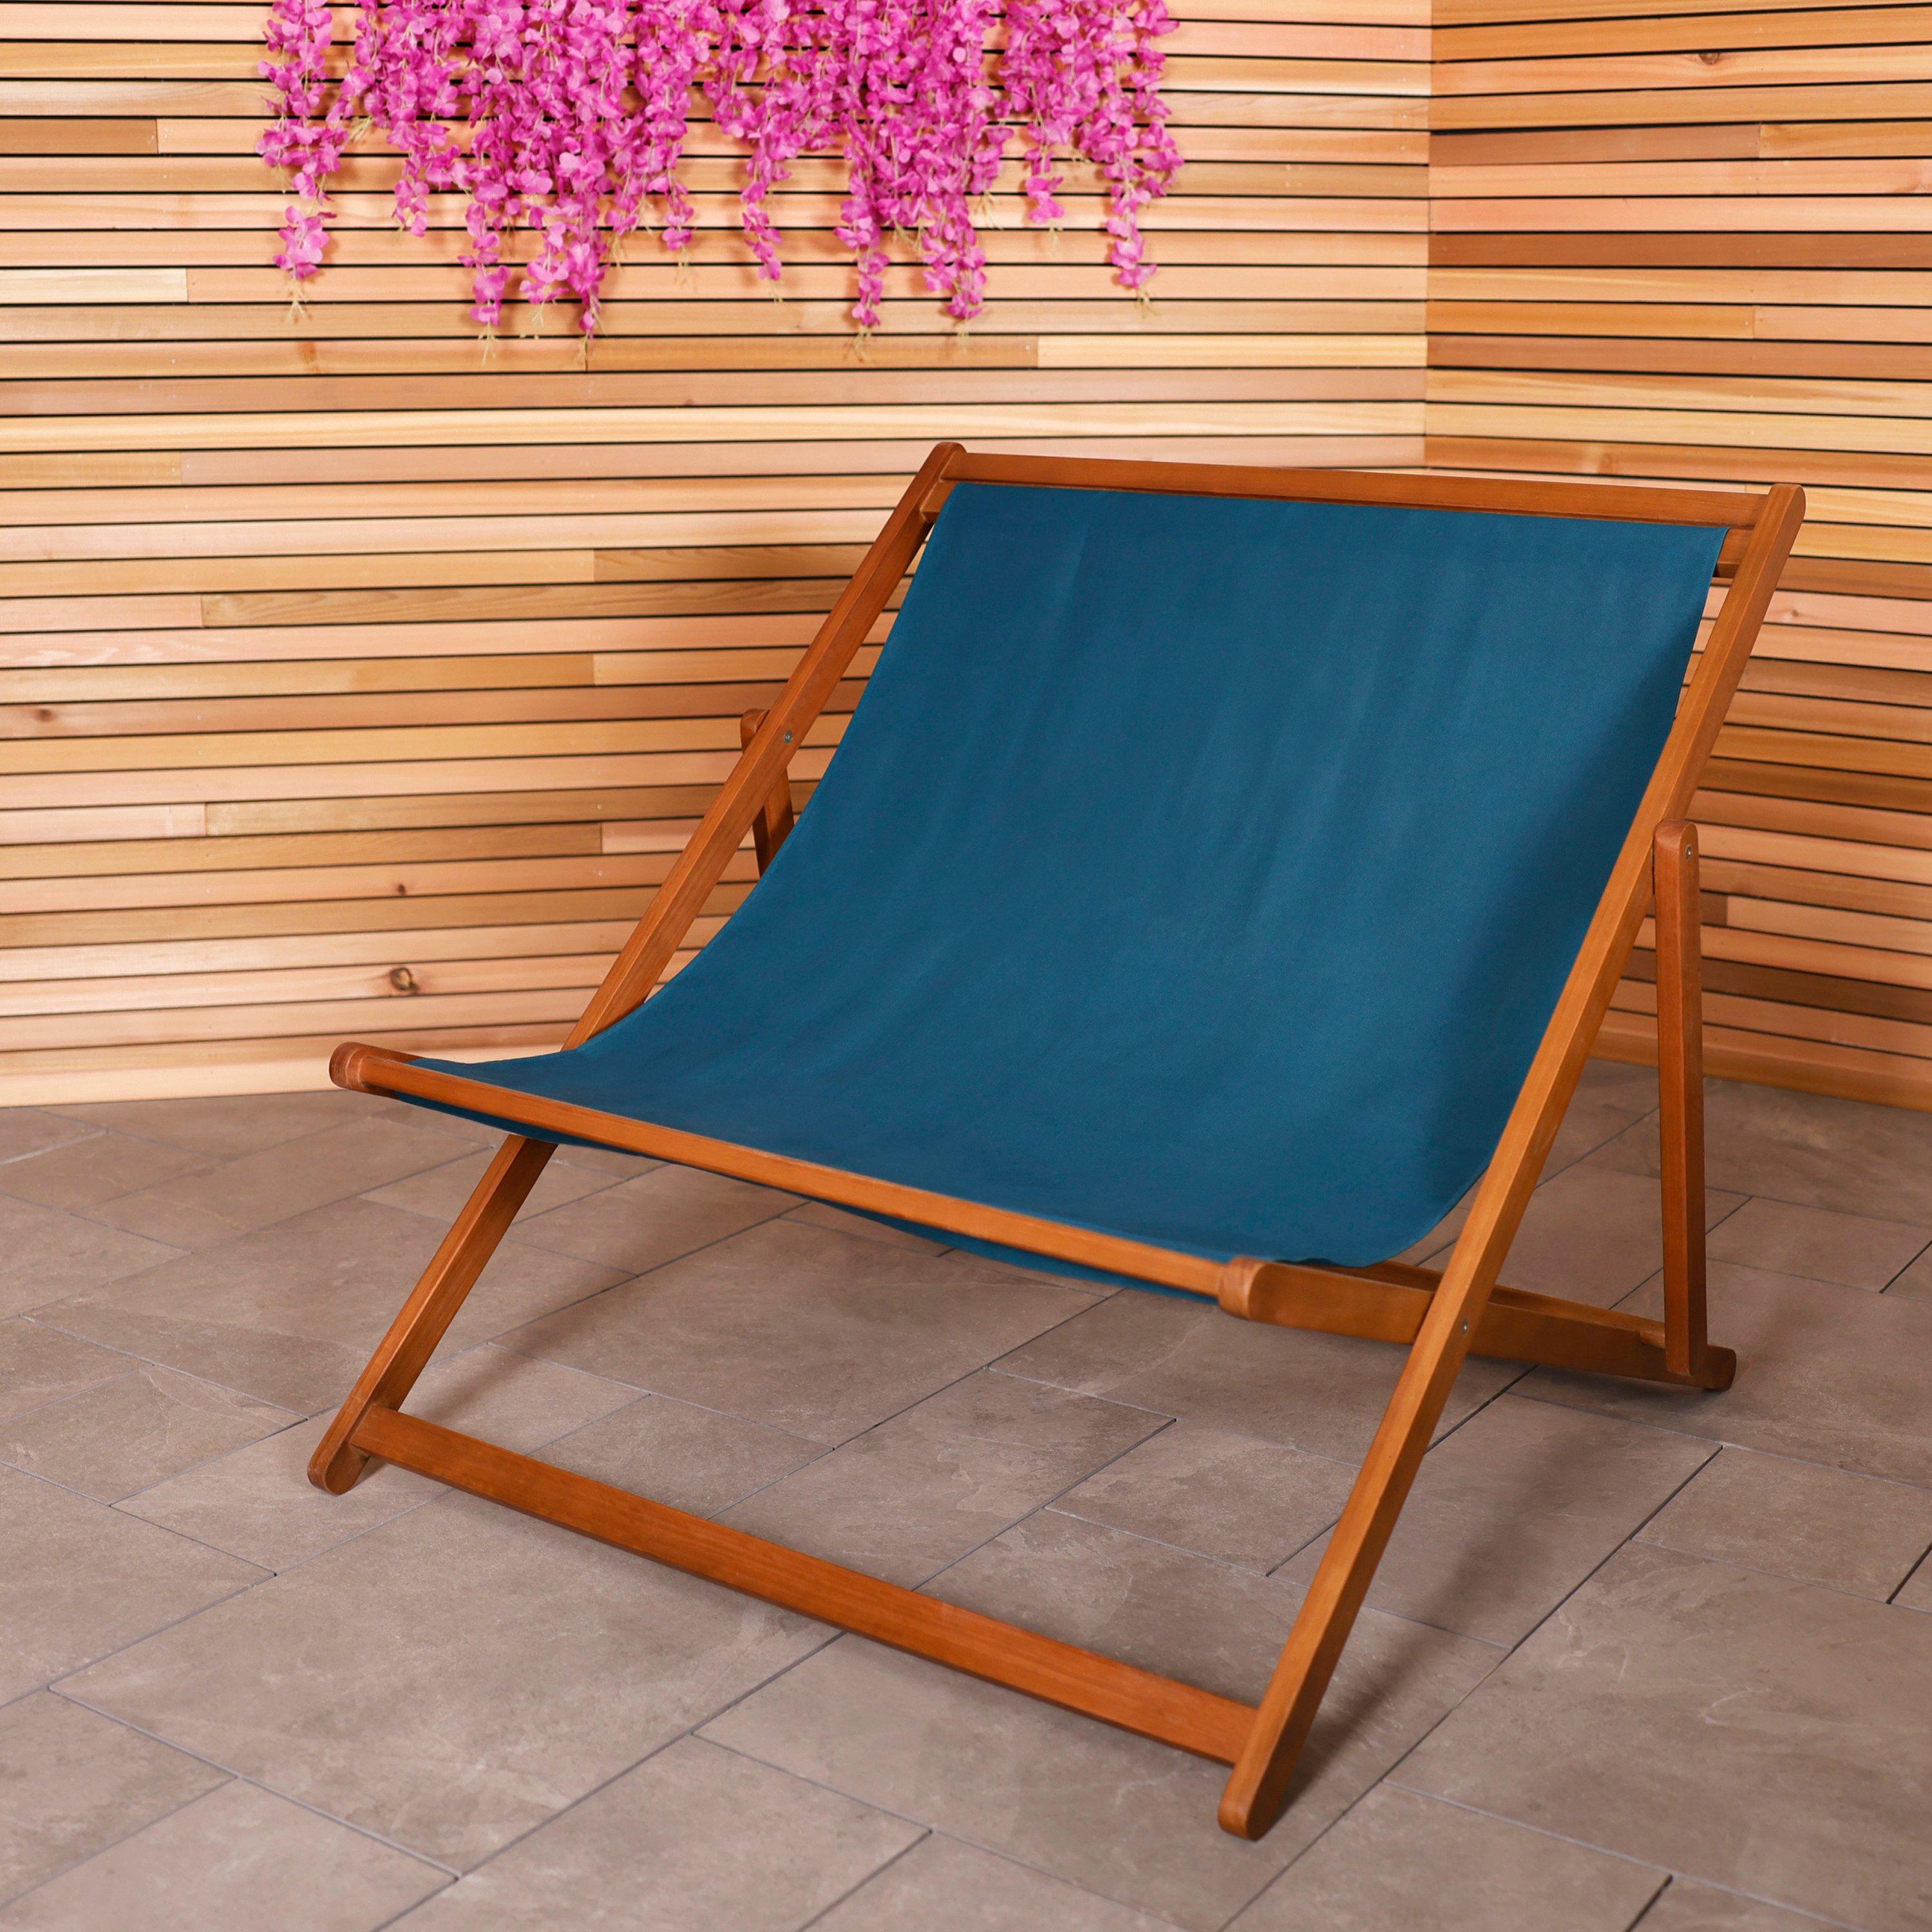 Eucalyptus Wooden Double Deck Chair for Outdoors and Garden